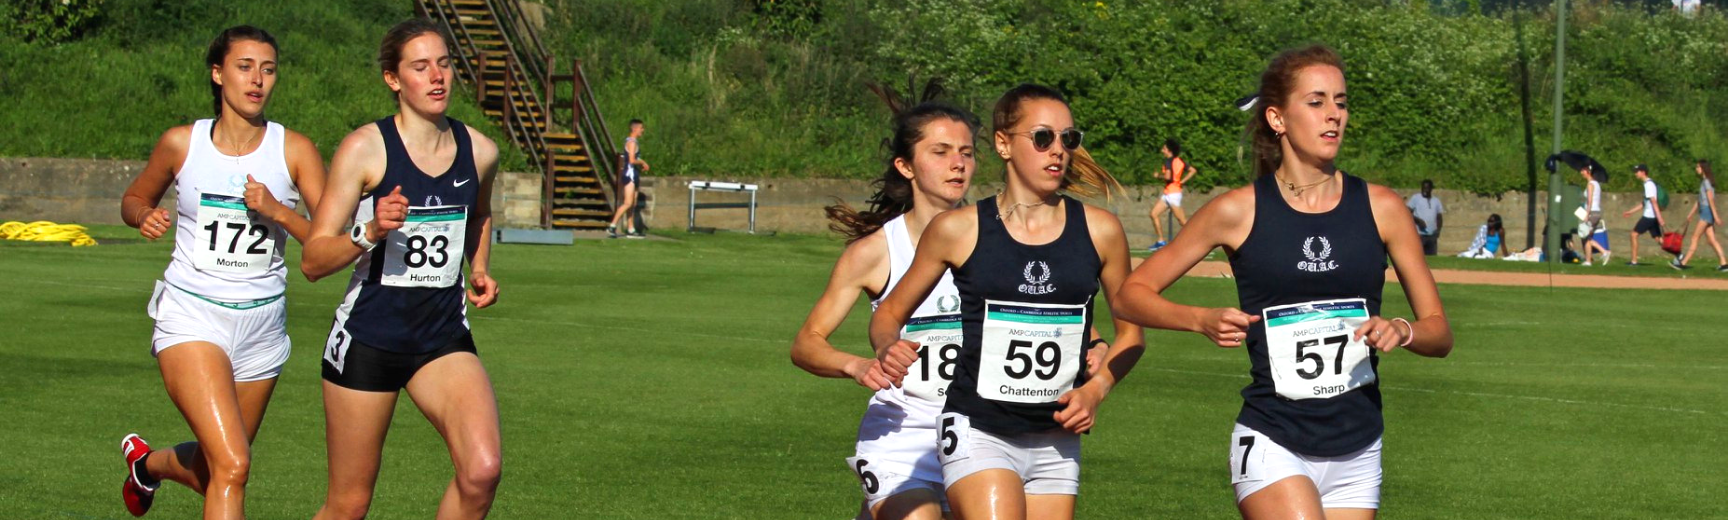 Five women running around the Sir Roger Bannisyer Running track in the Oxford vs Cambridge athletics Varsity match